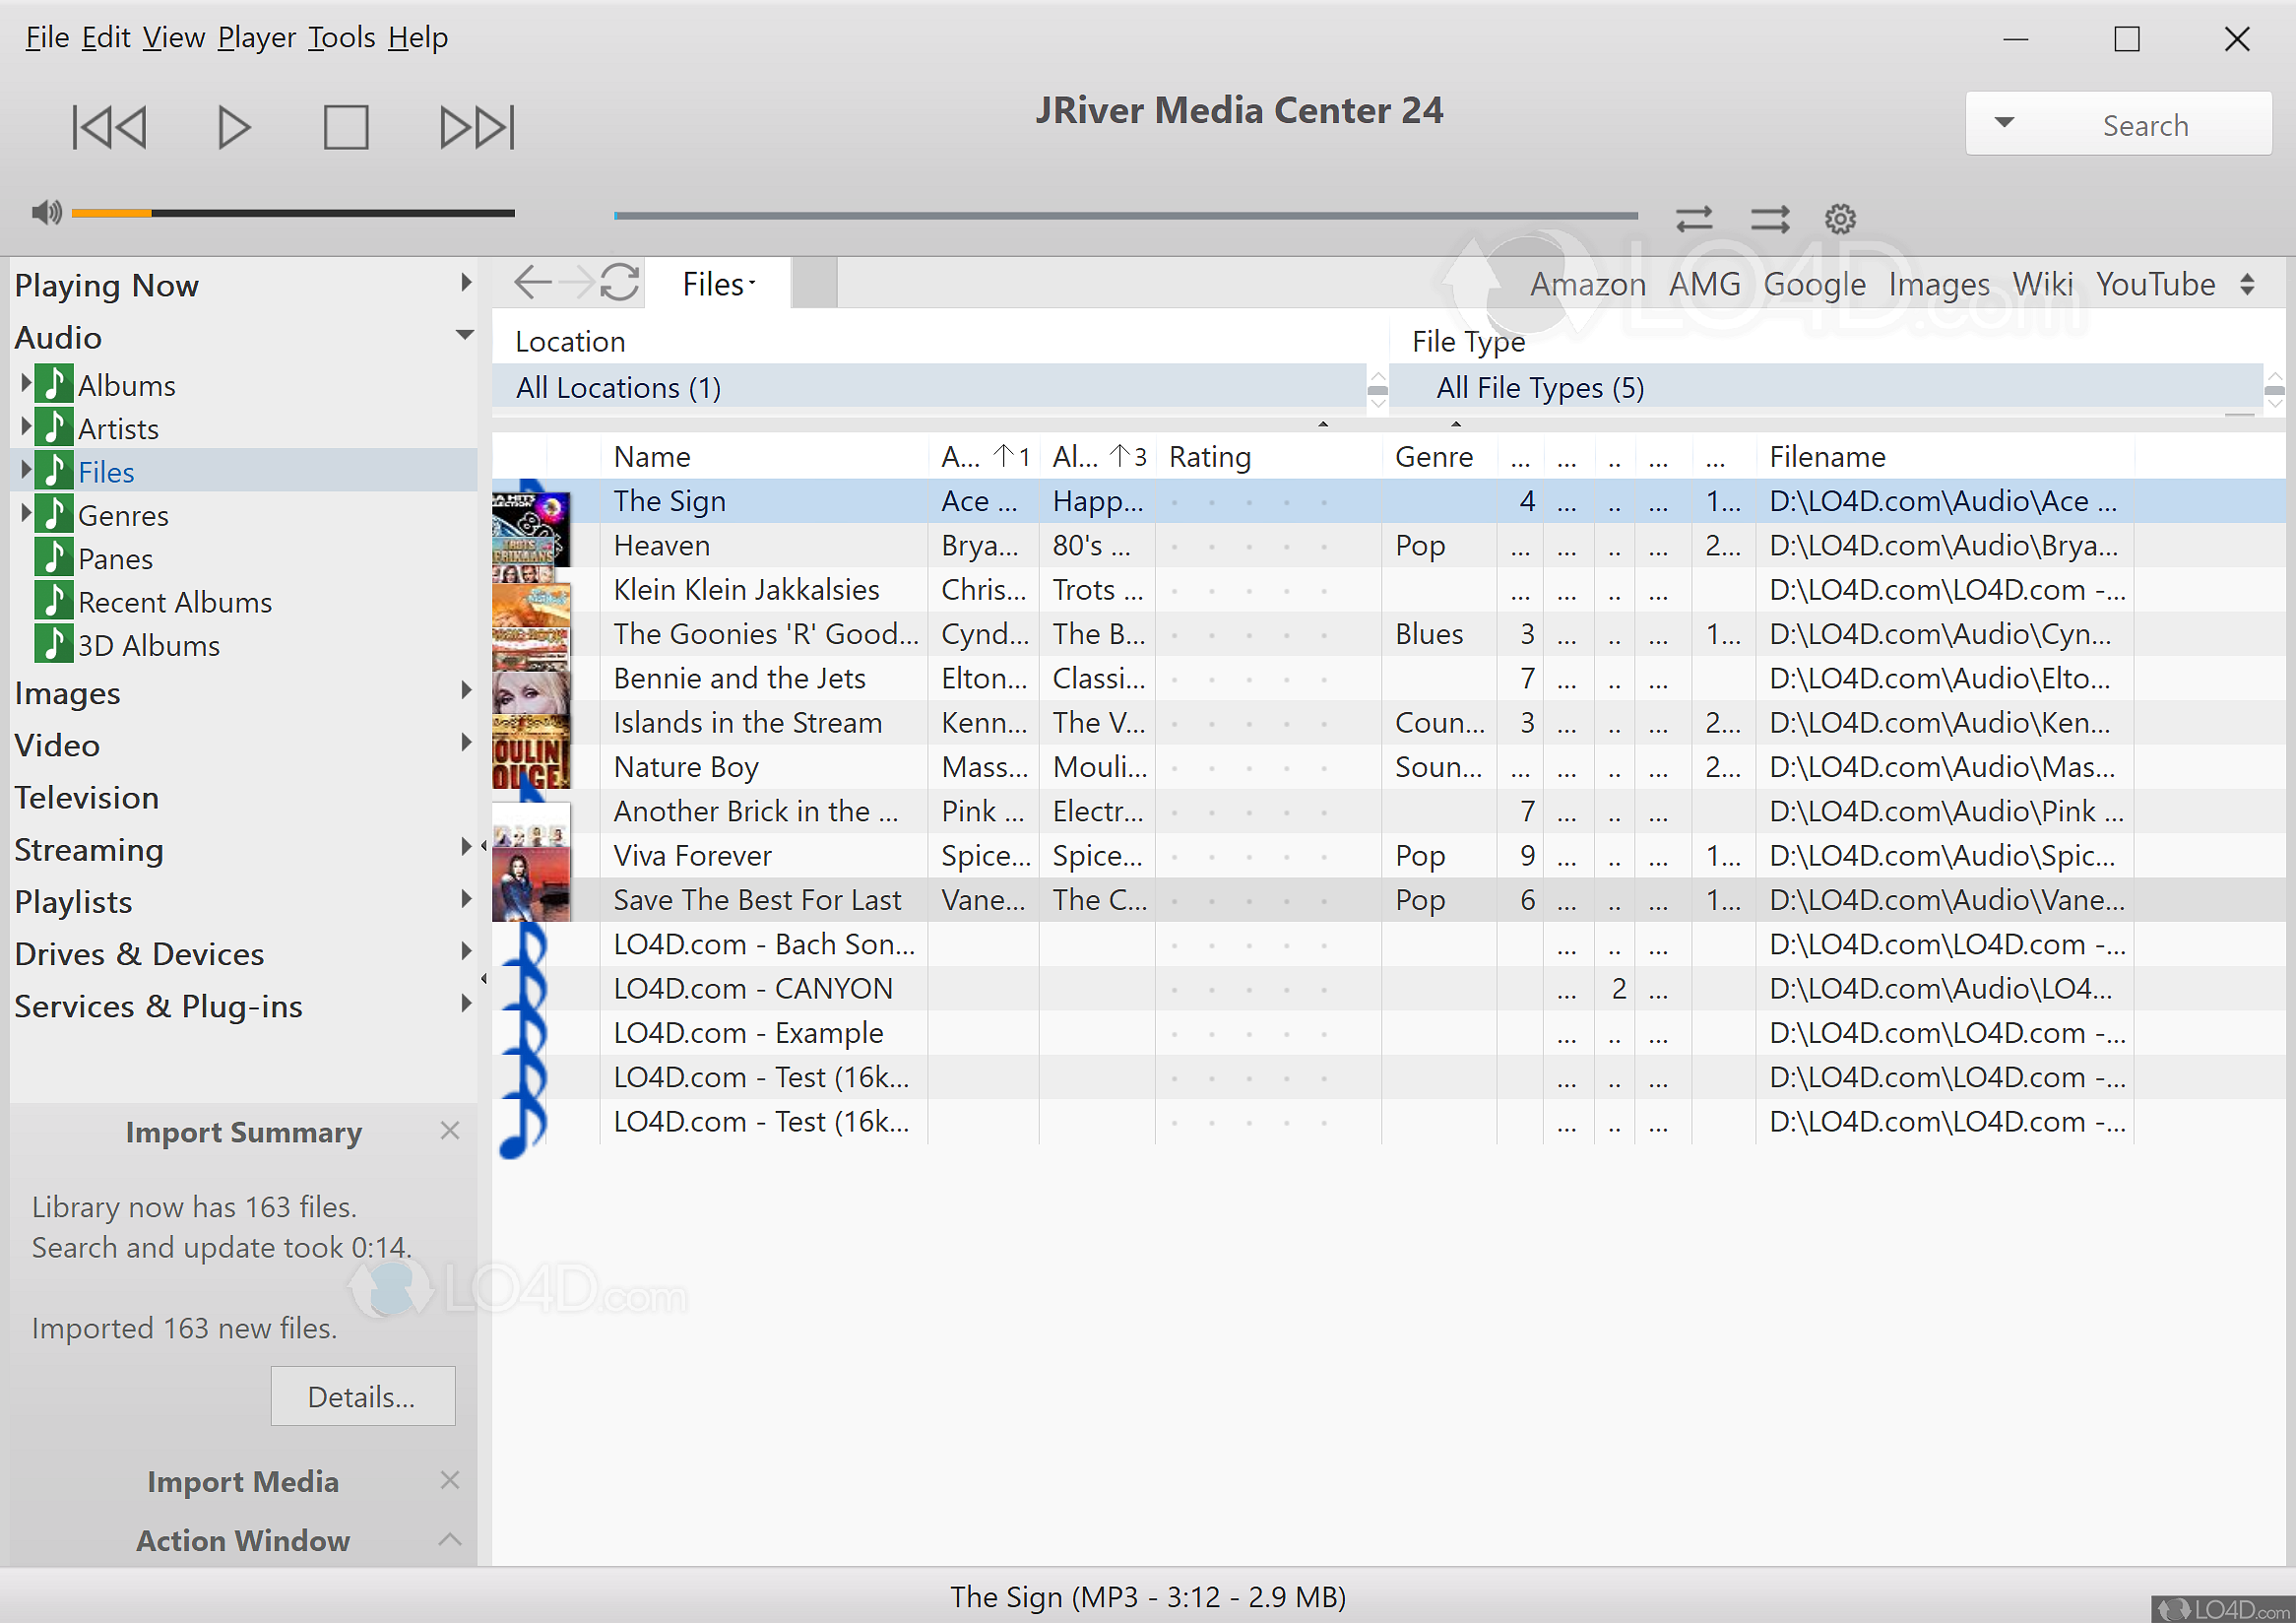 download the last version for mac JRiver Media Center 31.0.46